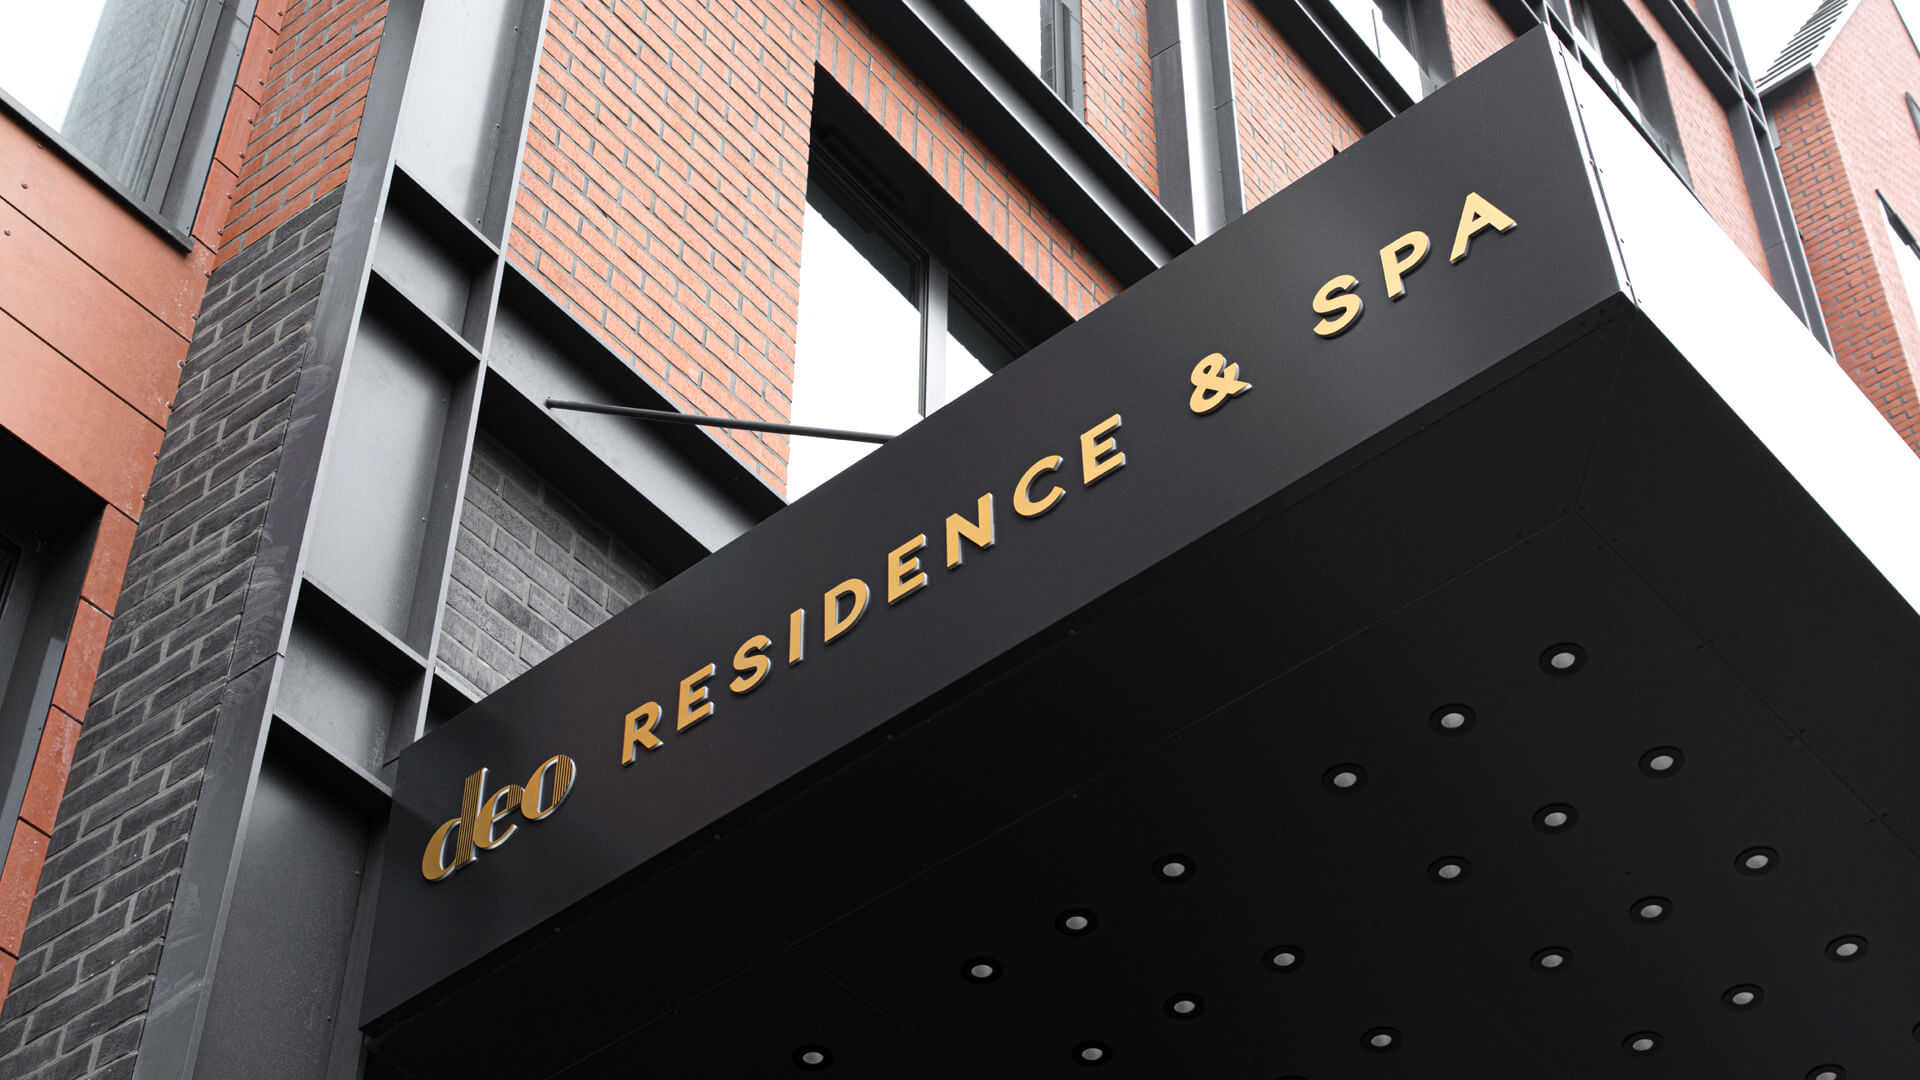 Cofanetto DEO Residence & SPA - Cofanetto con lettere dorate sopra l'ingresso del DEO Residence & SPA.